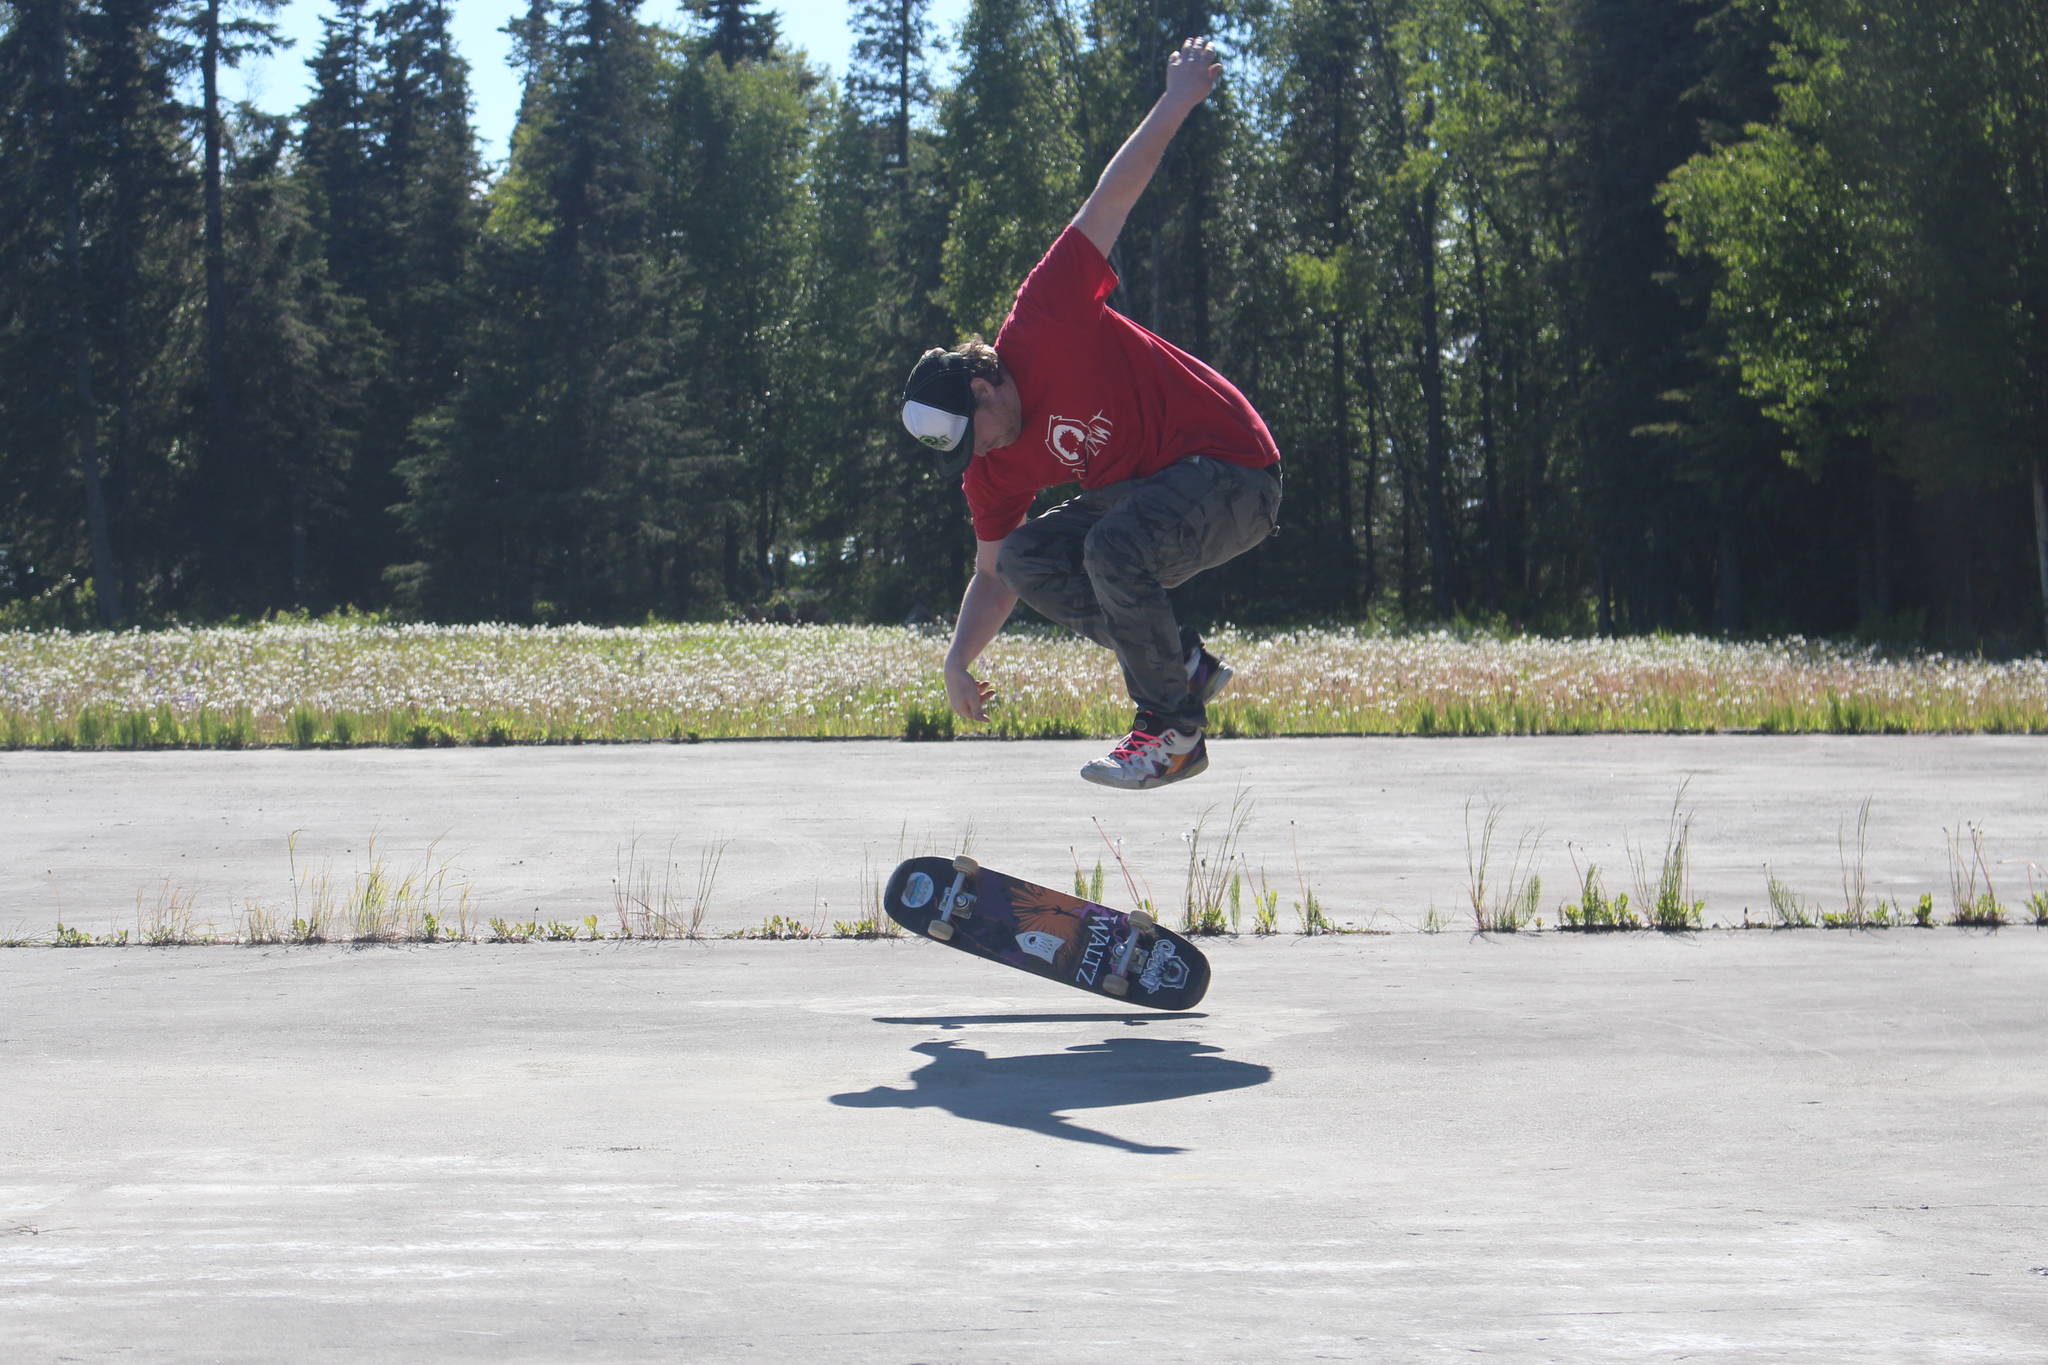 Nikiski skateboarder Vaughn Johnson records his run for the 2020 World Freestyle Roundup in Nikiski, Alaska on June 14, 2020. (Photo by Brian Mazurek/Peninsula Clarion)